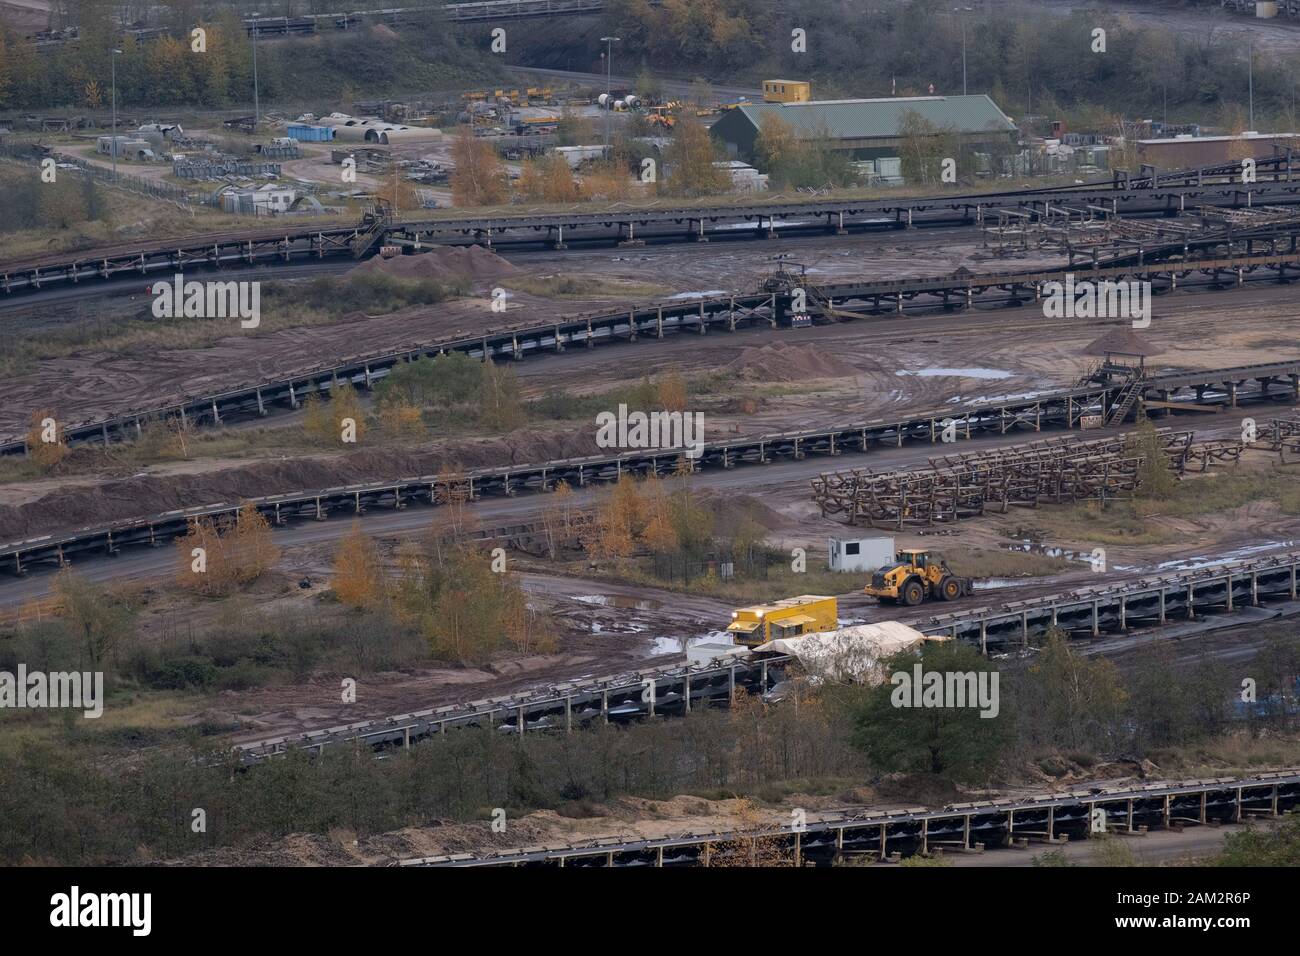 Múltiples vías férreas cerca de la mina de carbón a cielo abierto, Garzweiller, Alemania Foto de stock